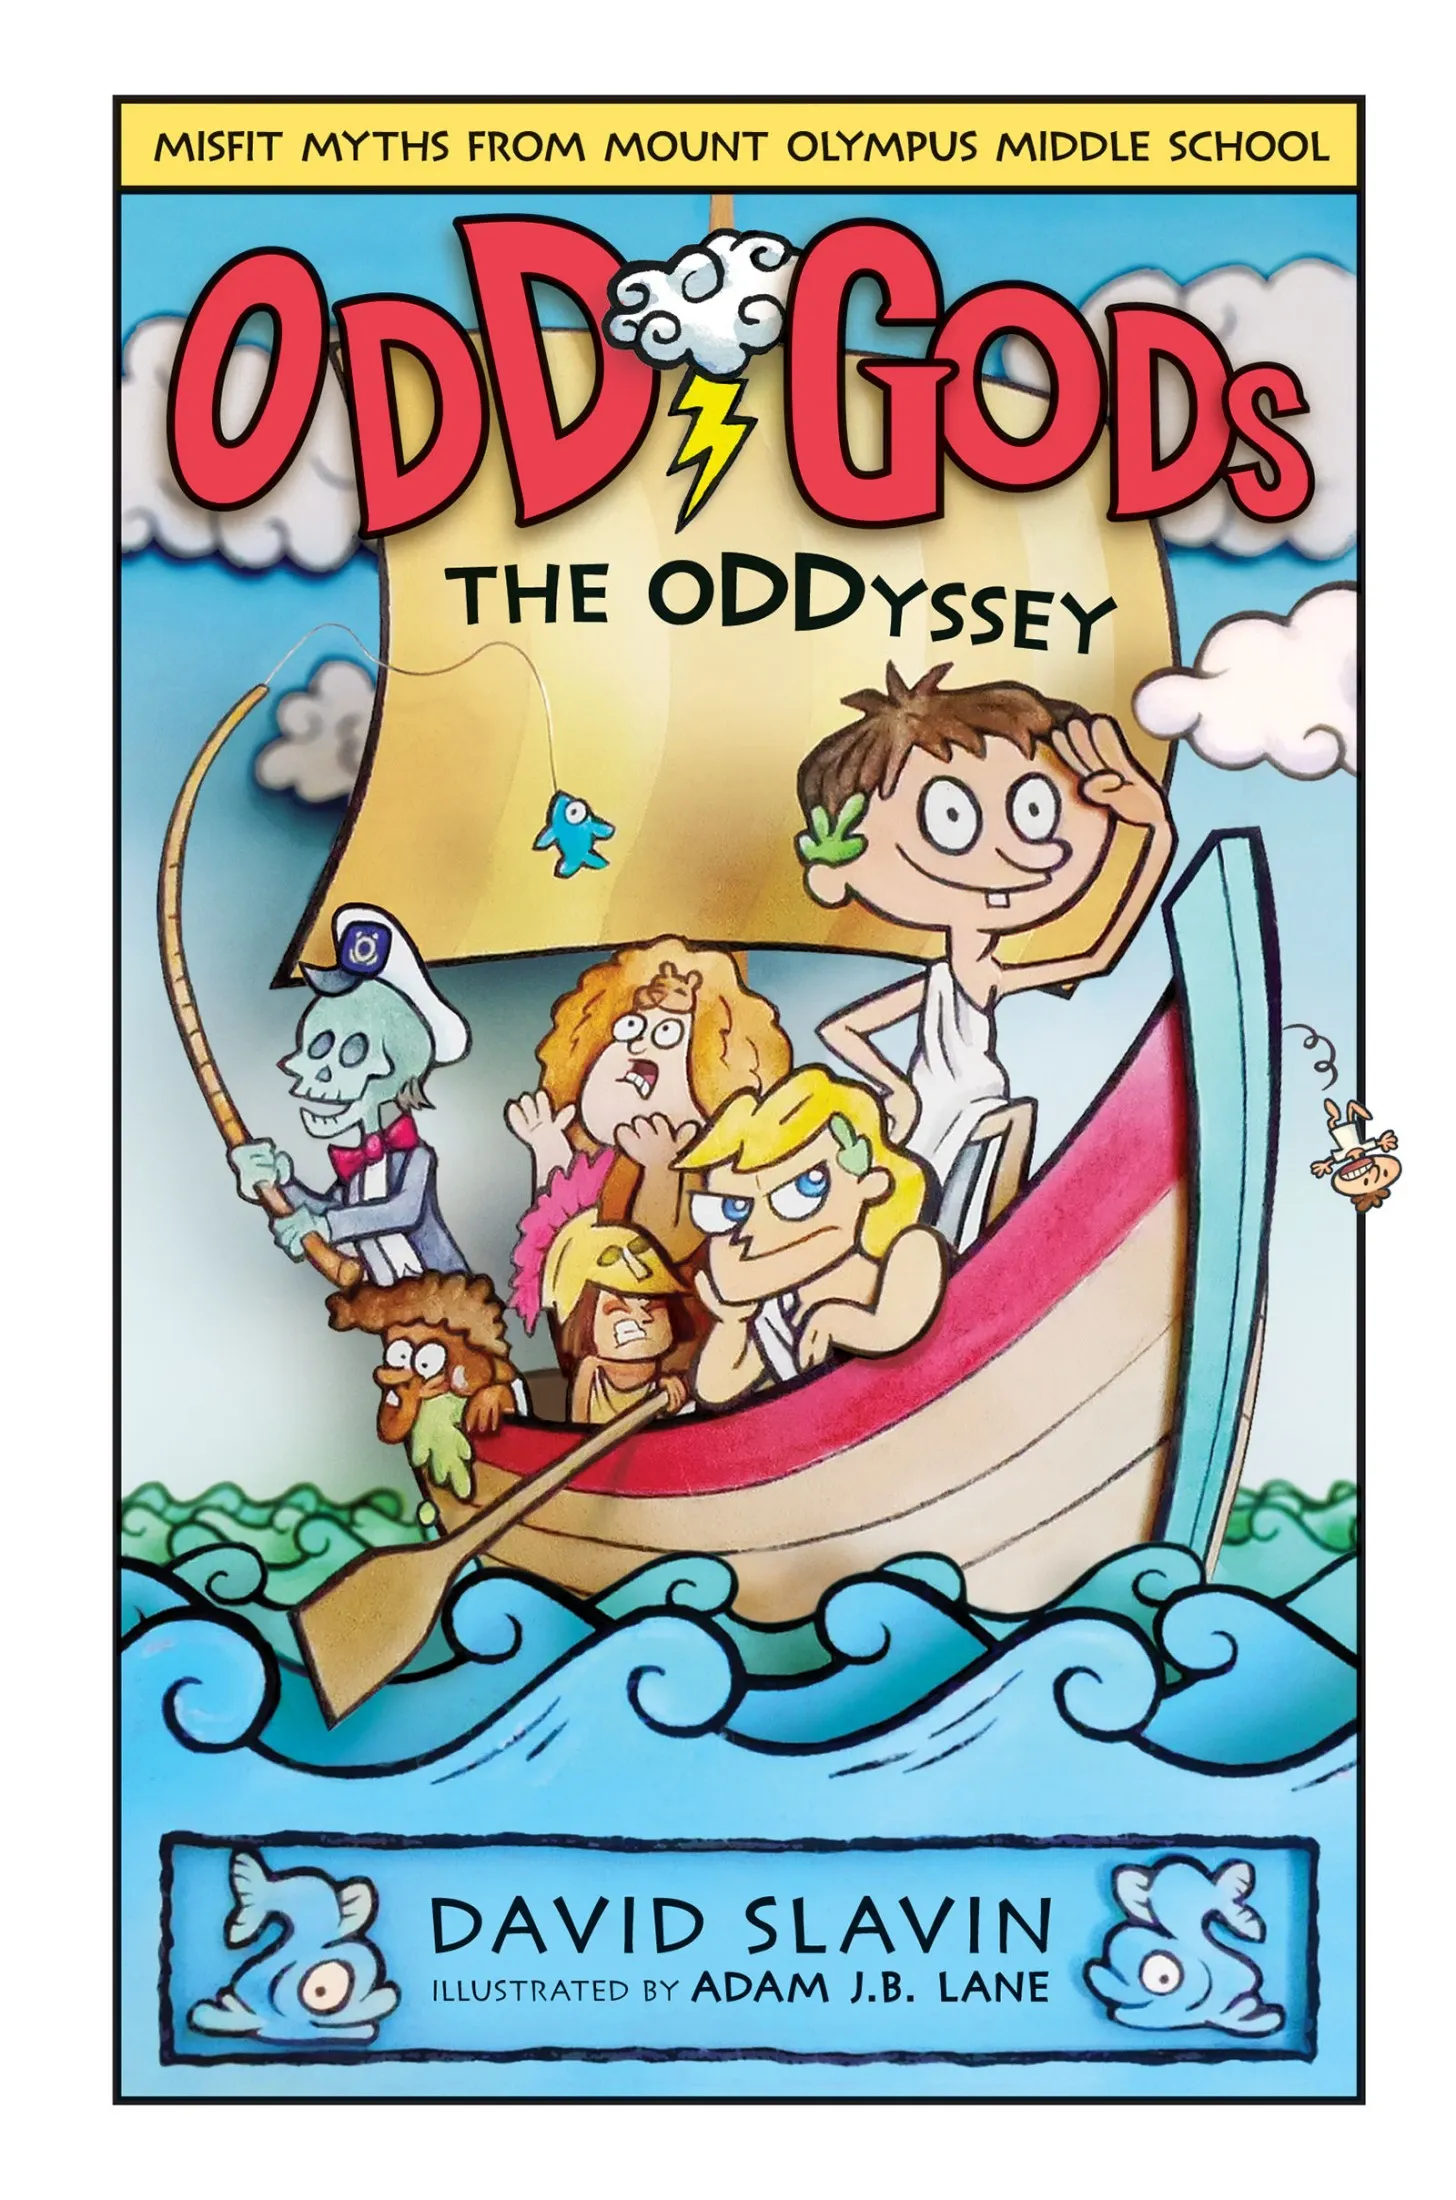 The Oddyssey (Odd Gods #2)